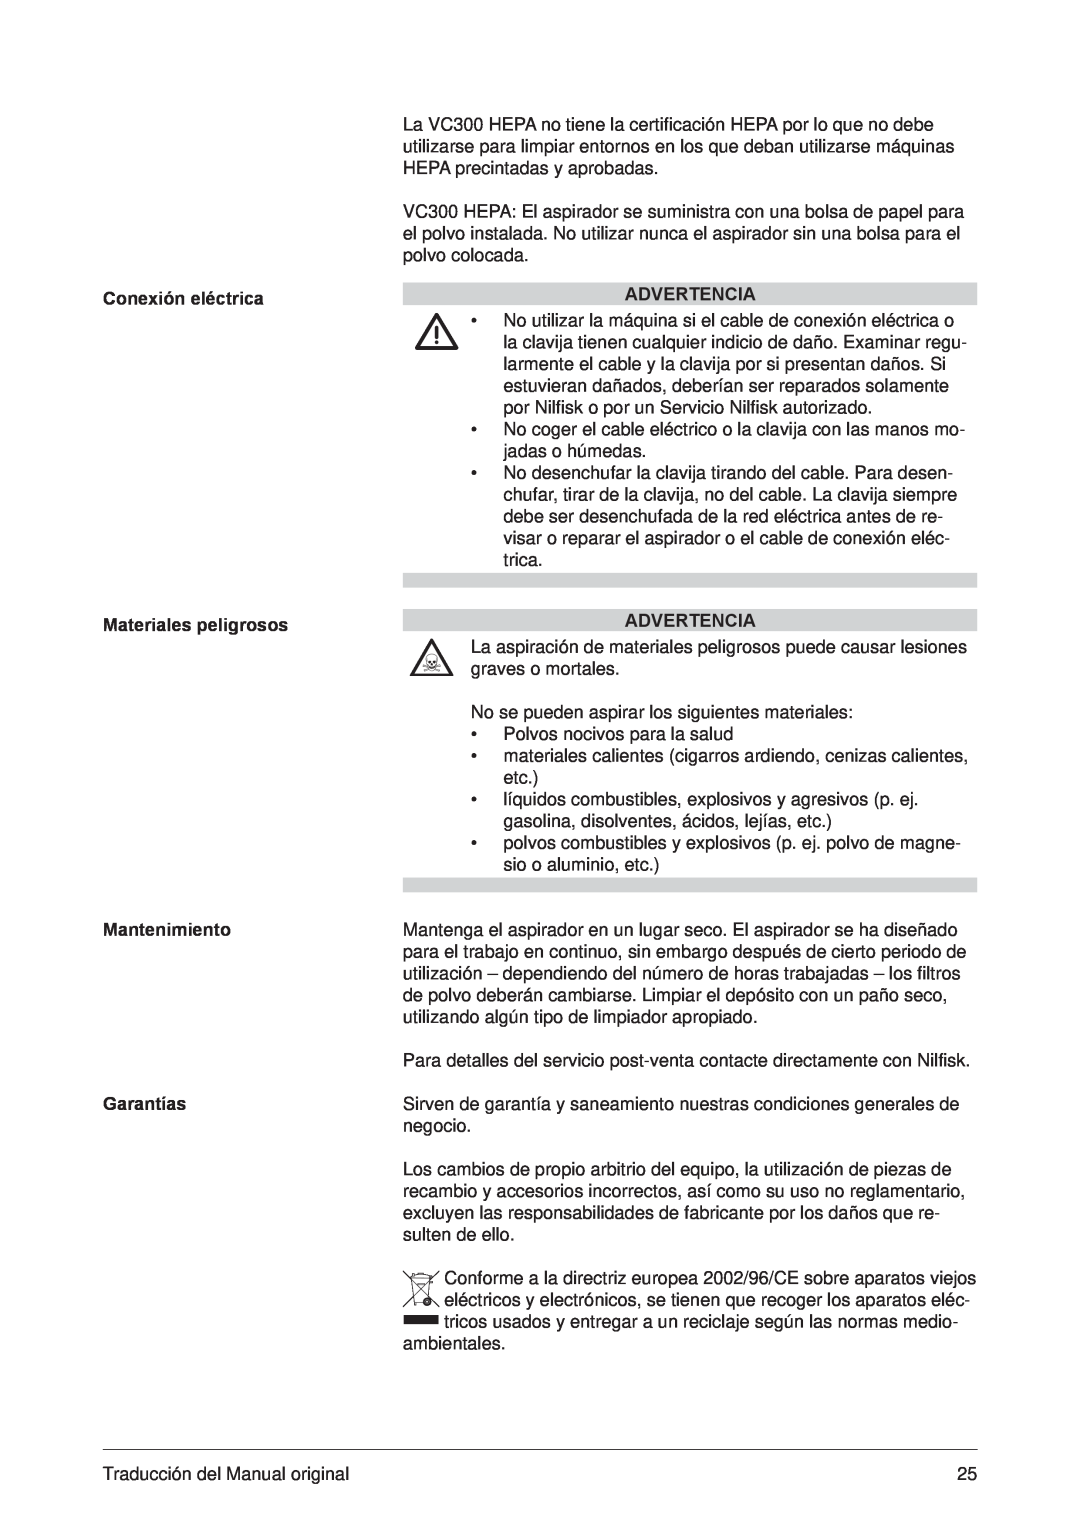 Nilfisk-Advance America VC300 user manual Conexión eléctrica Materiales peligrosos, Mantenimiento Garantías, Advertencia 